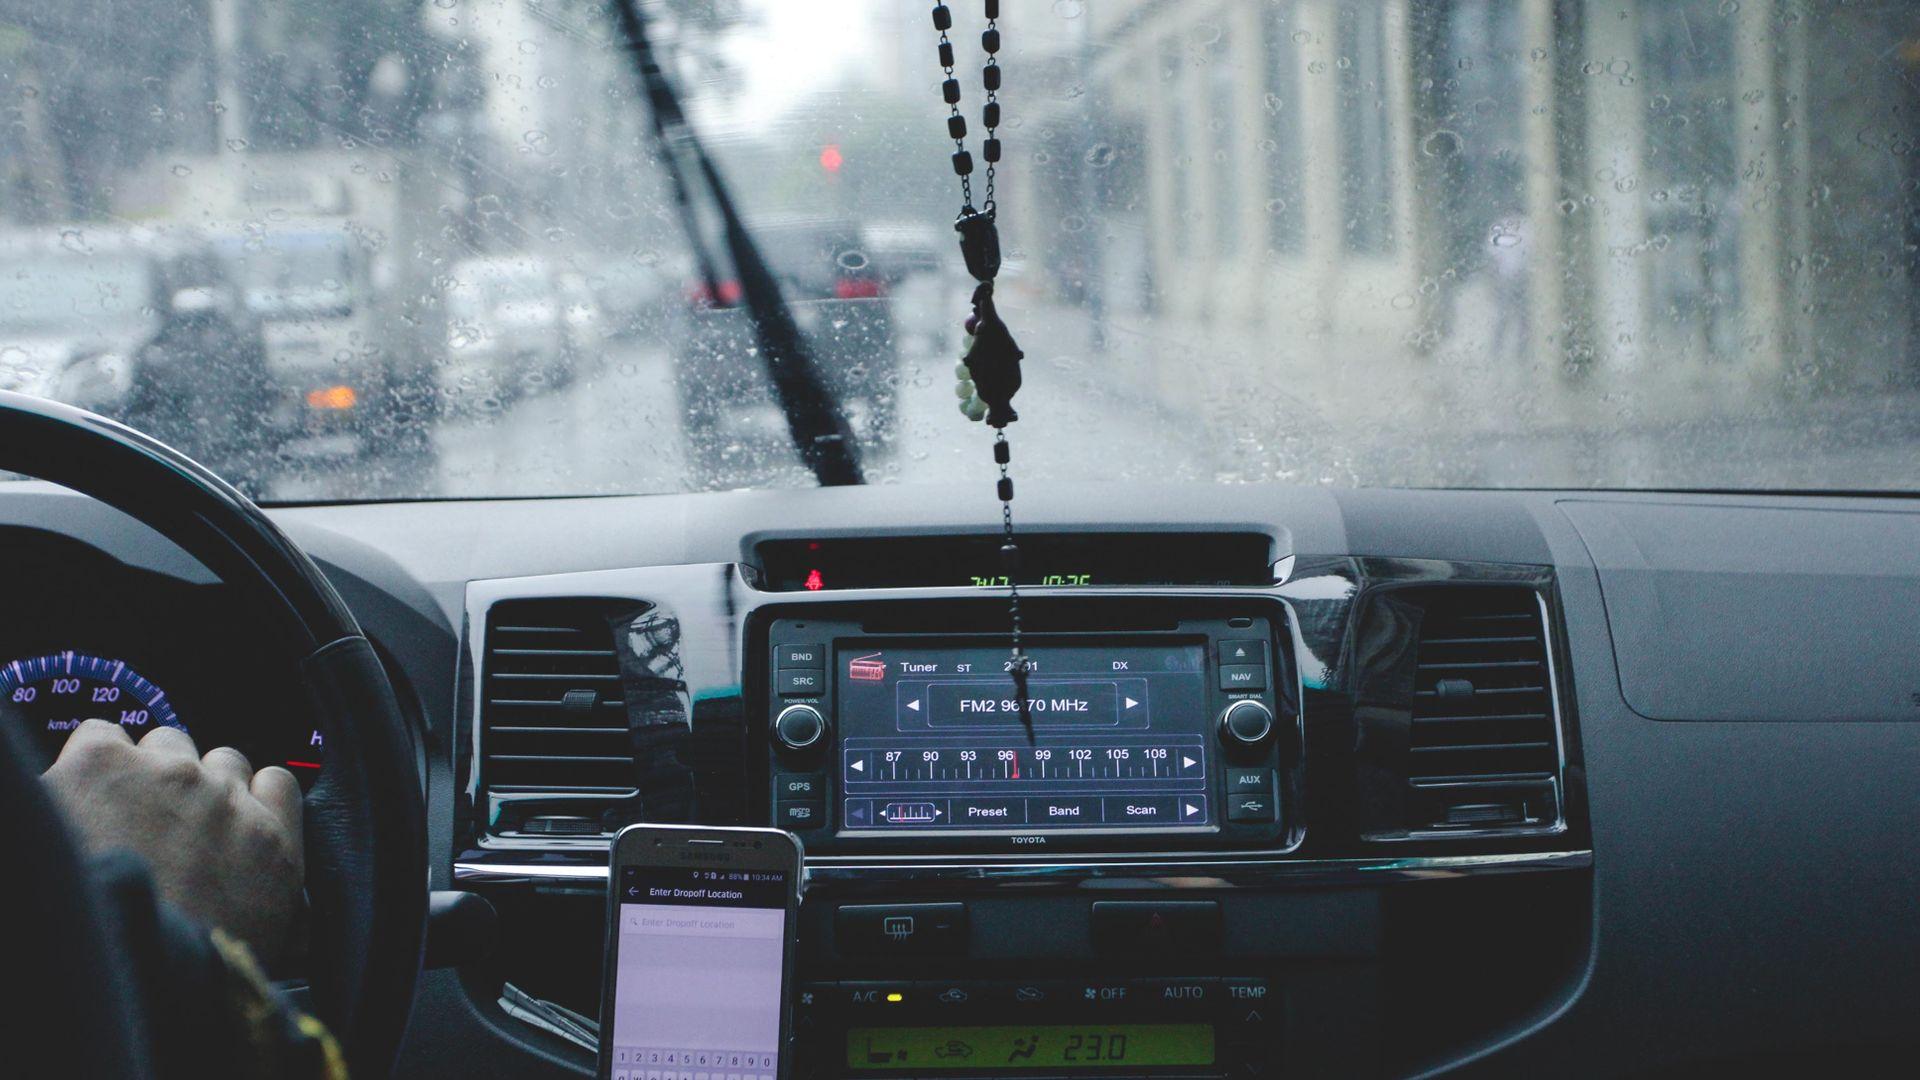 Car Rain Wallpapers Top Free Car Rain Backgrounds WallpaperAccess